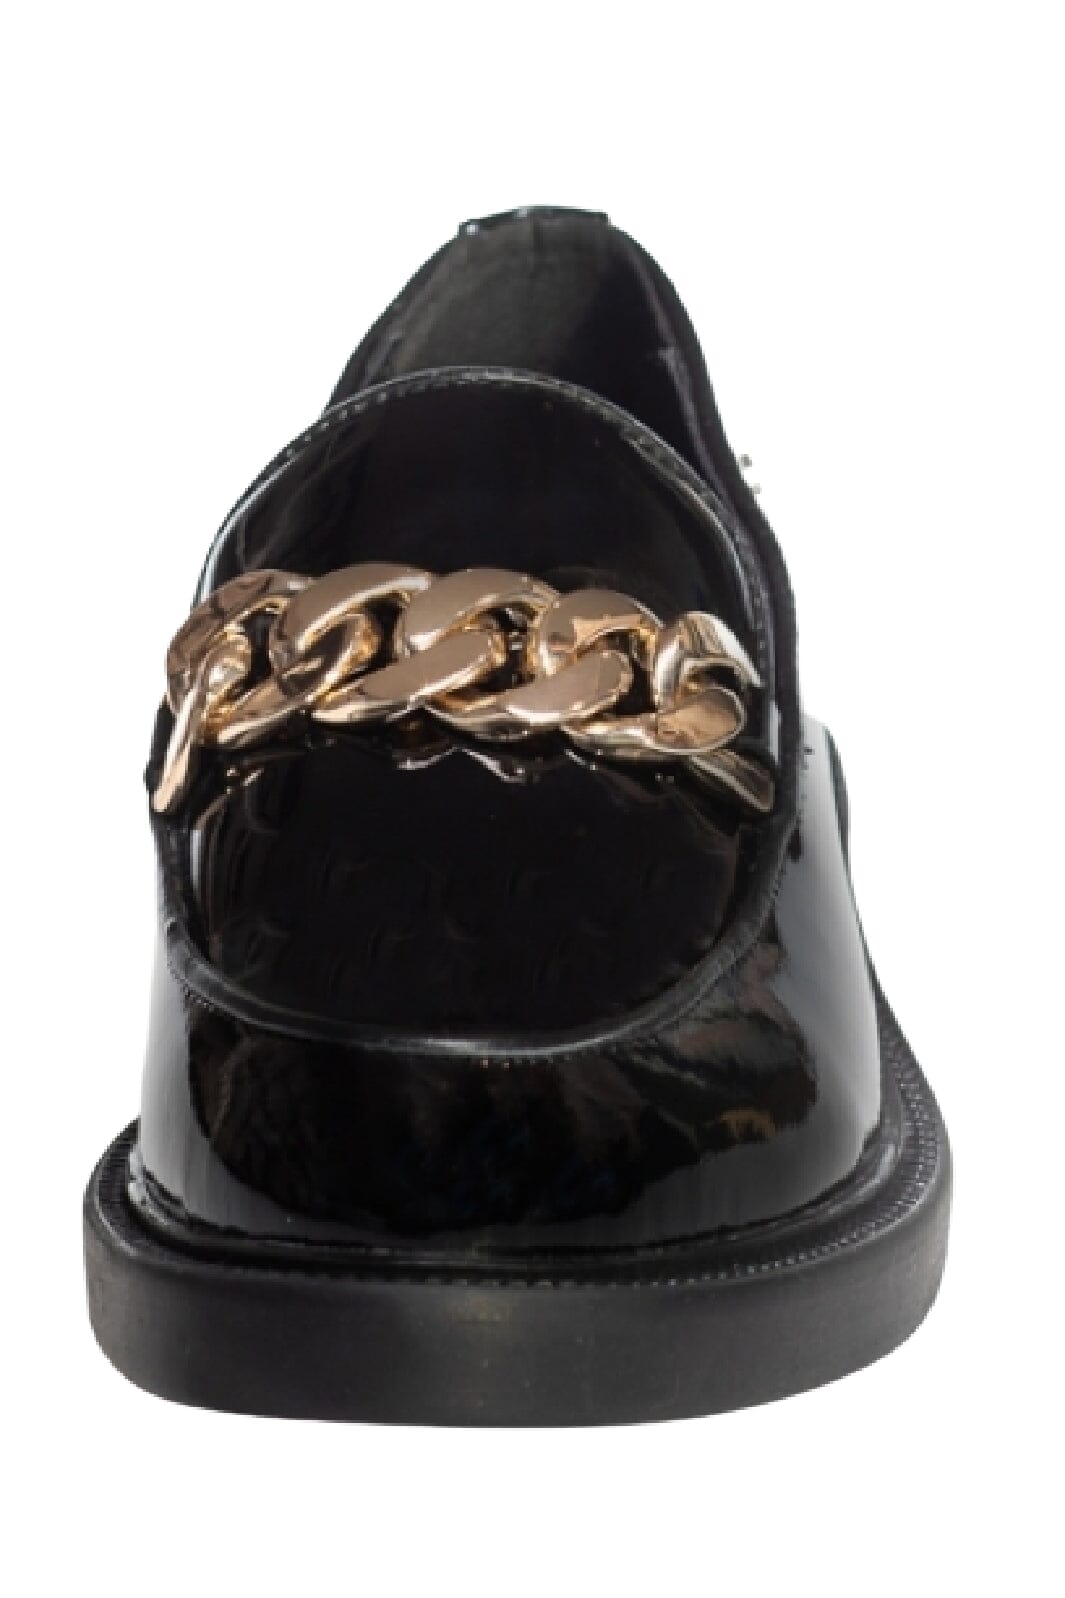 Copenhagen Shoes - Aware Patent - Black Patent Loafers 